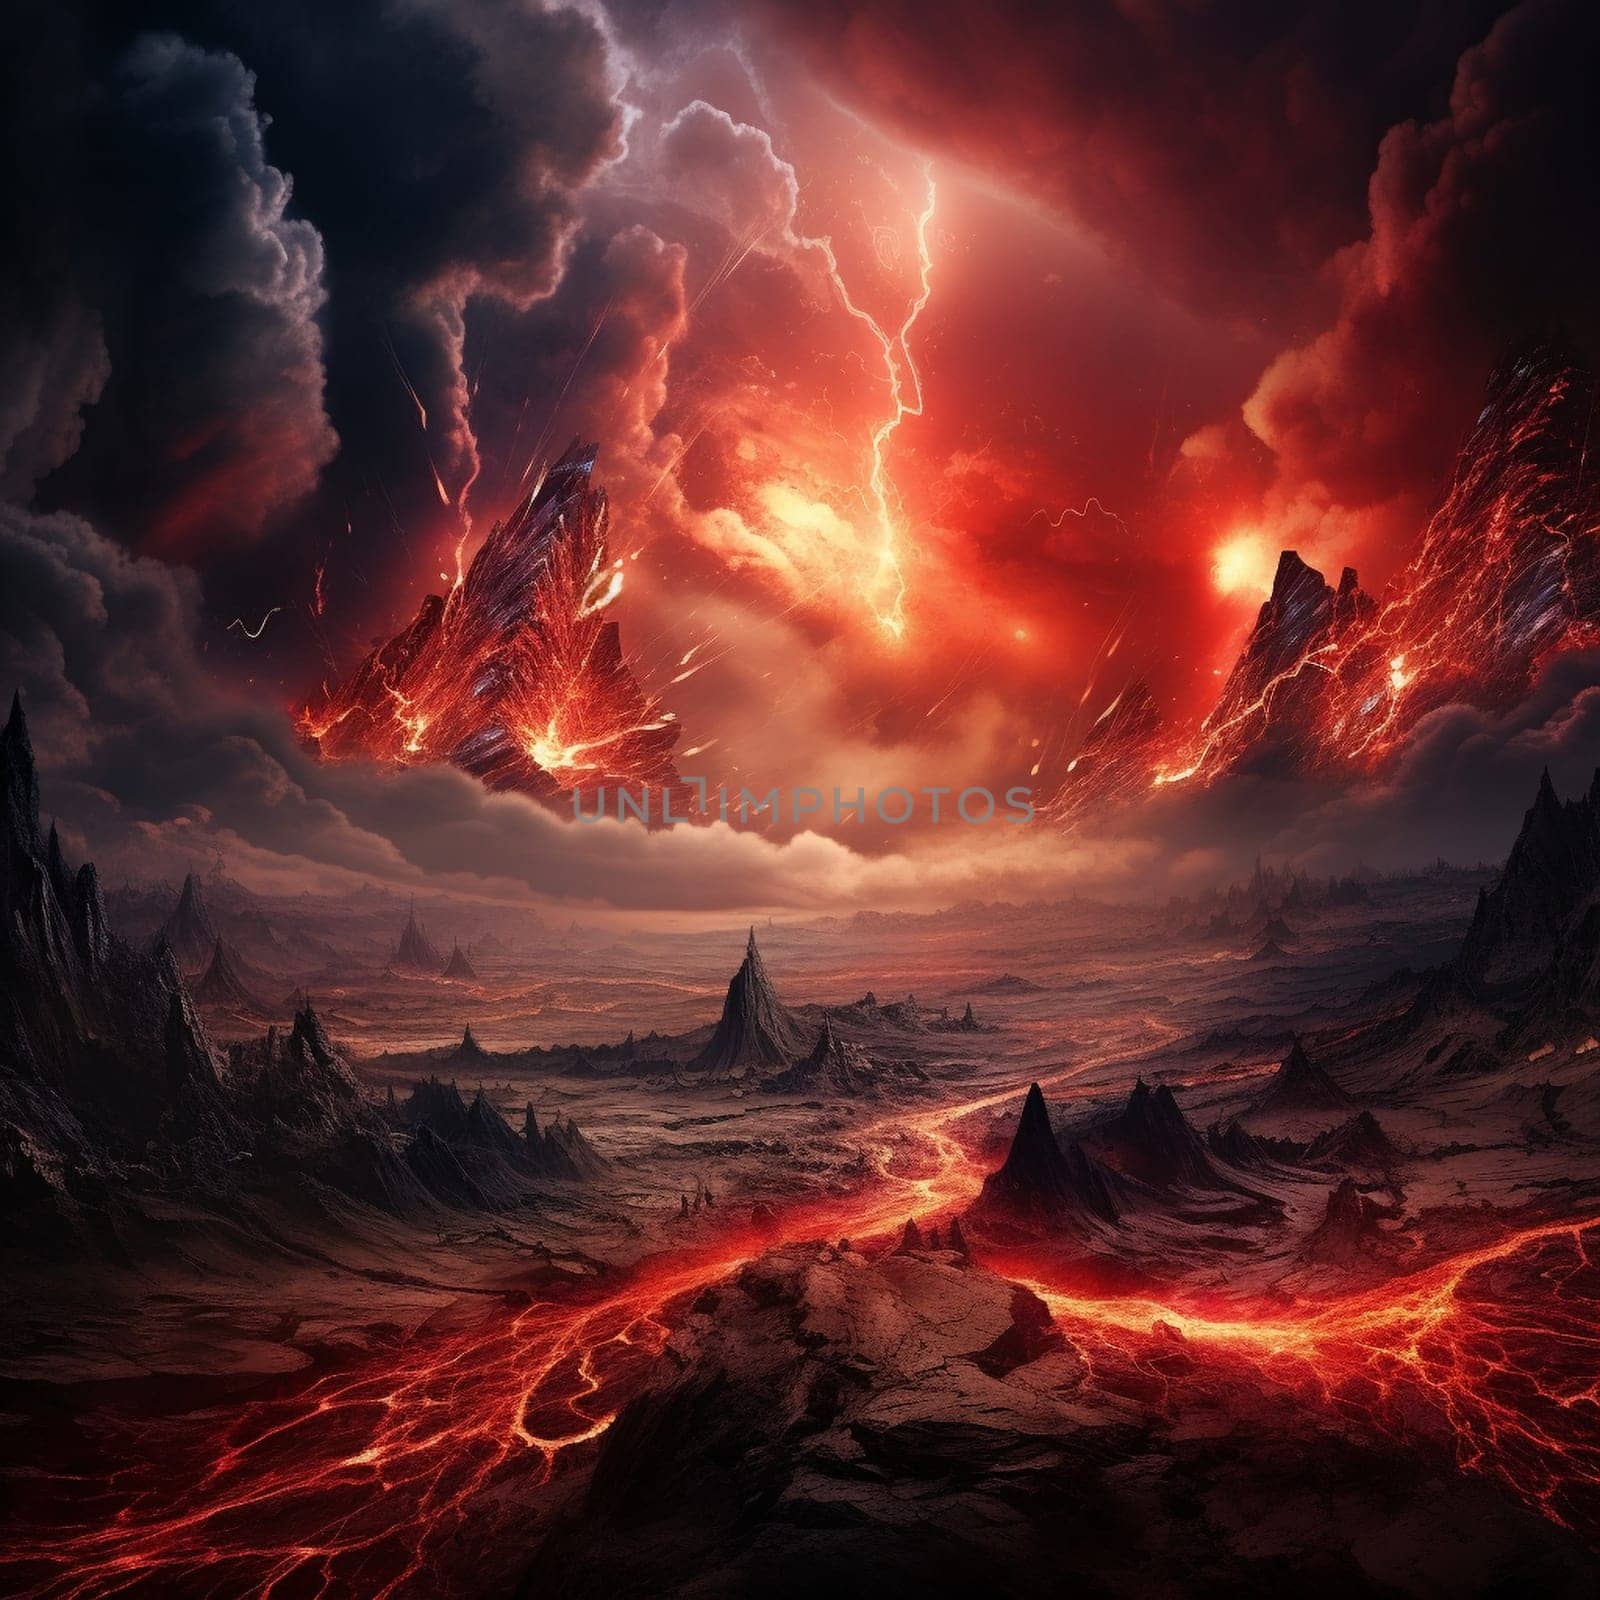 Surreal volcanic vortex engulfing serene landscape by Sahin